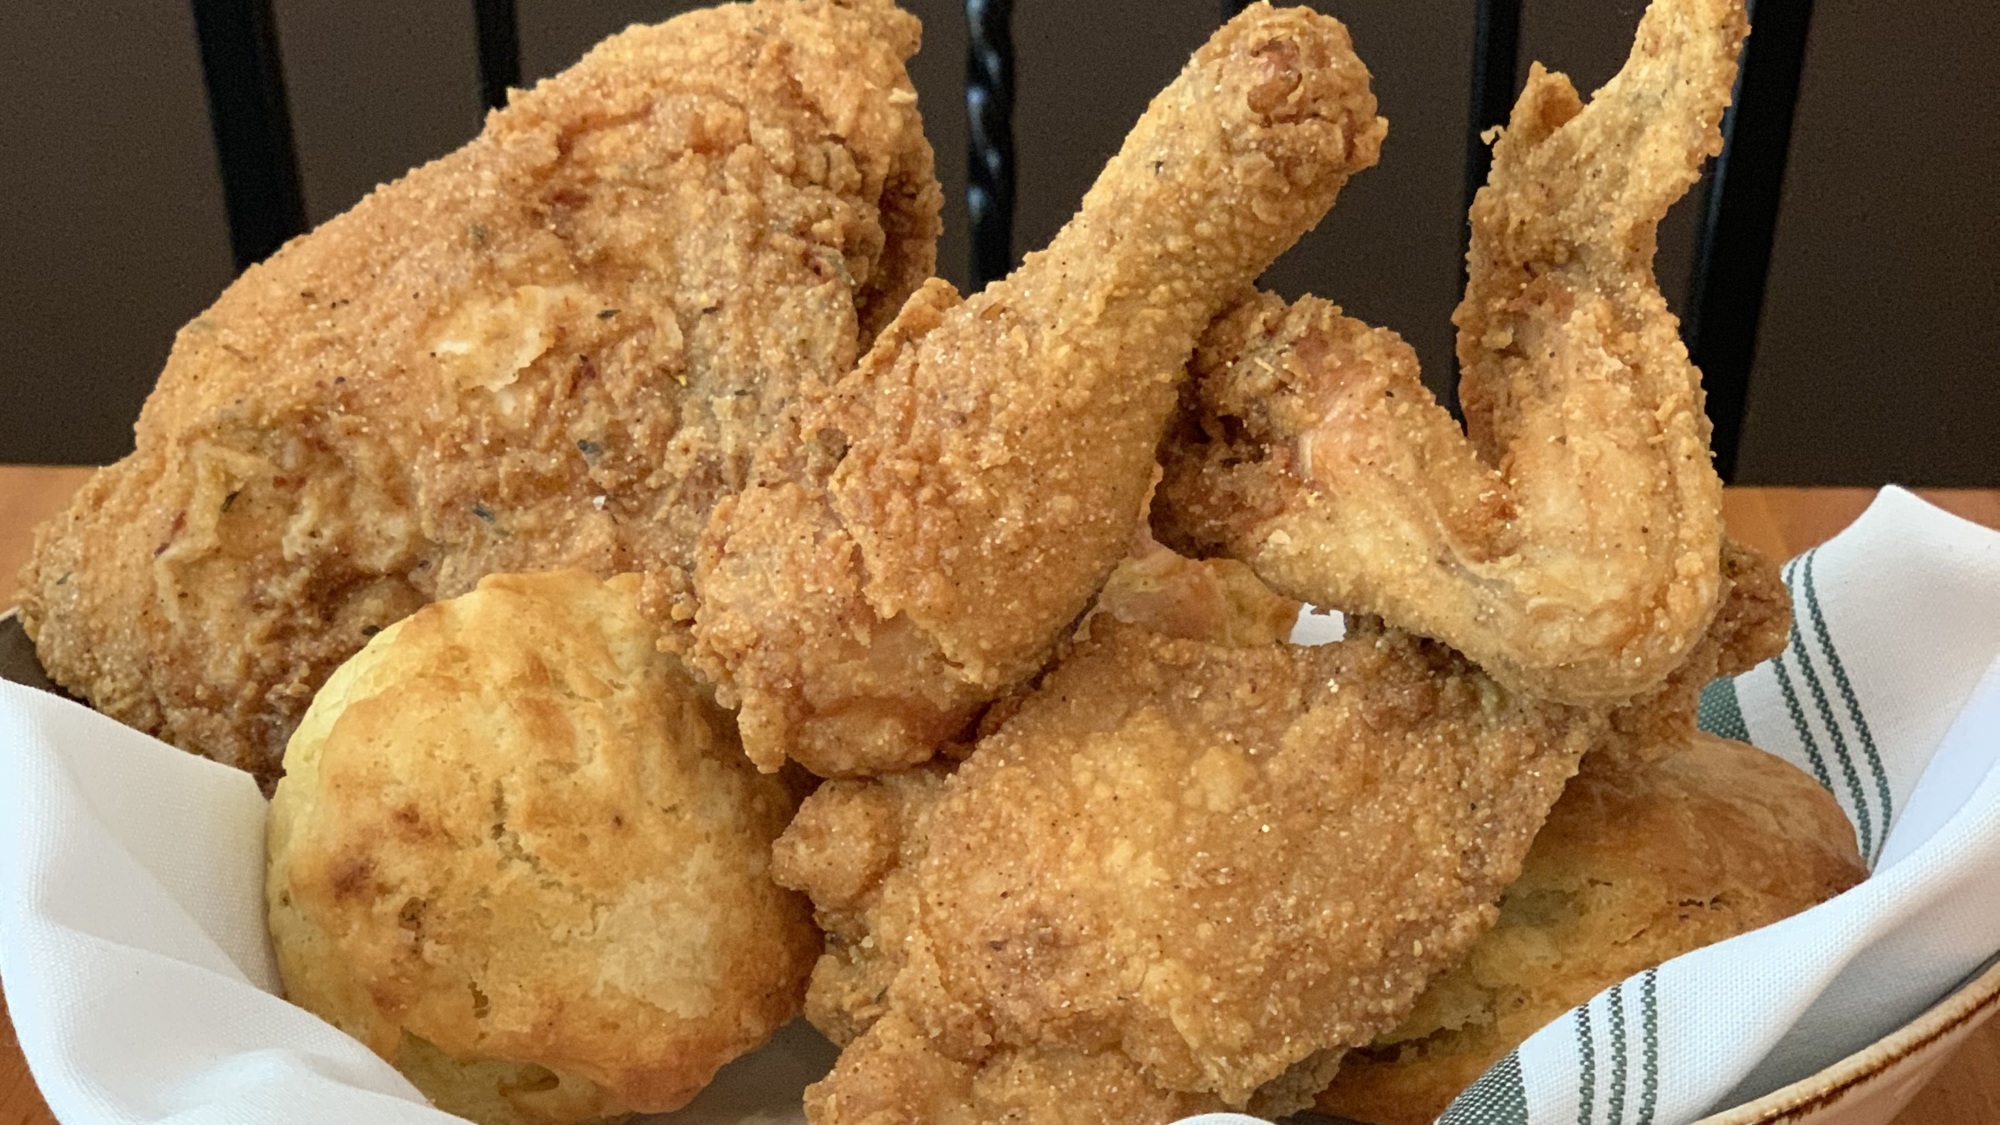 The fried chicken at Big Jones.